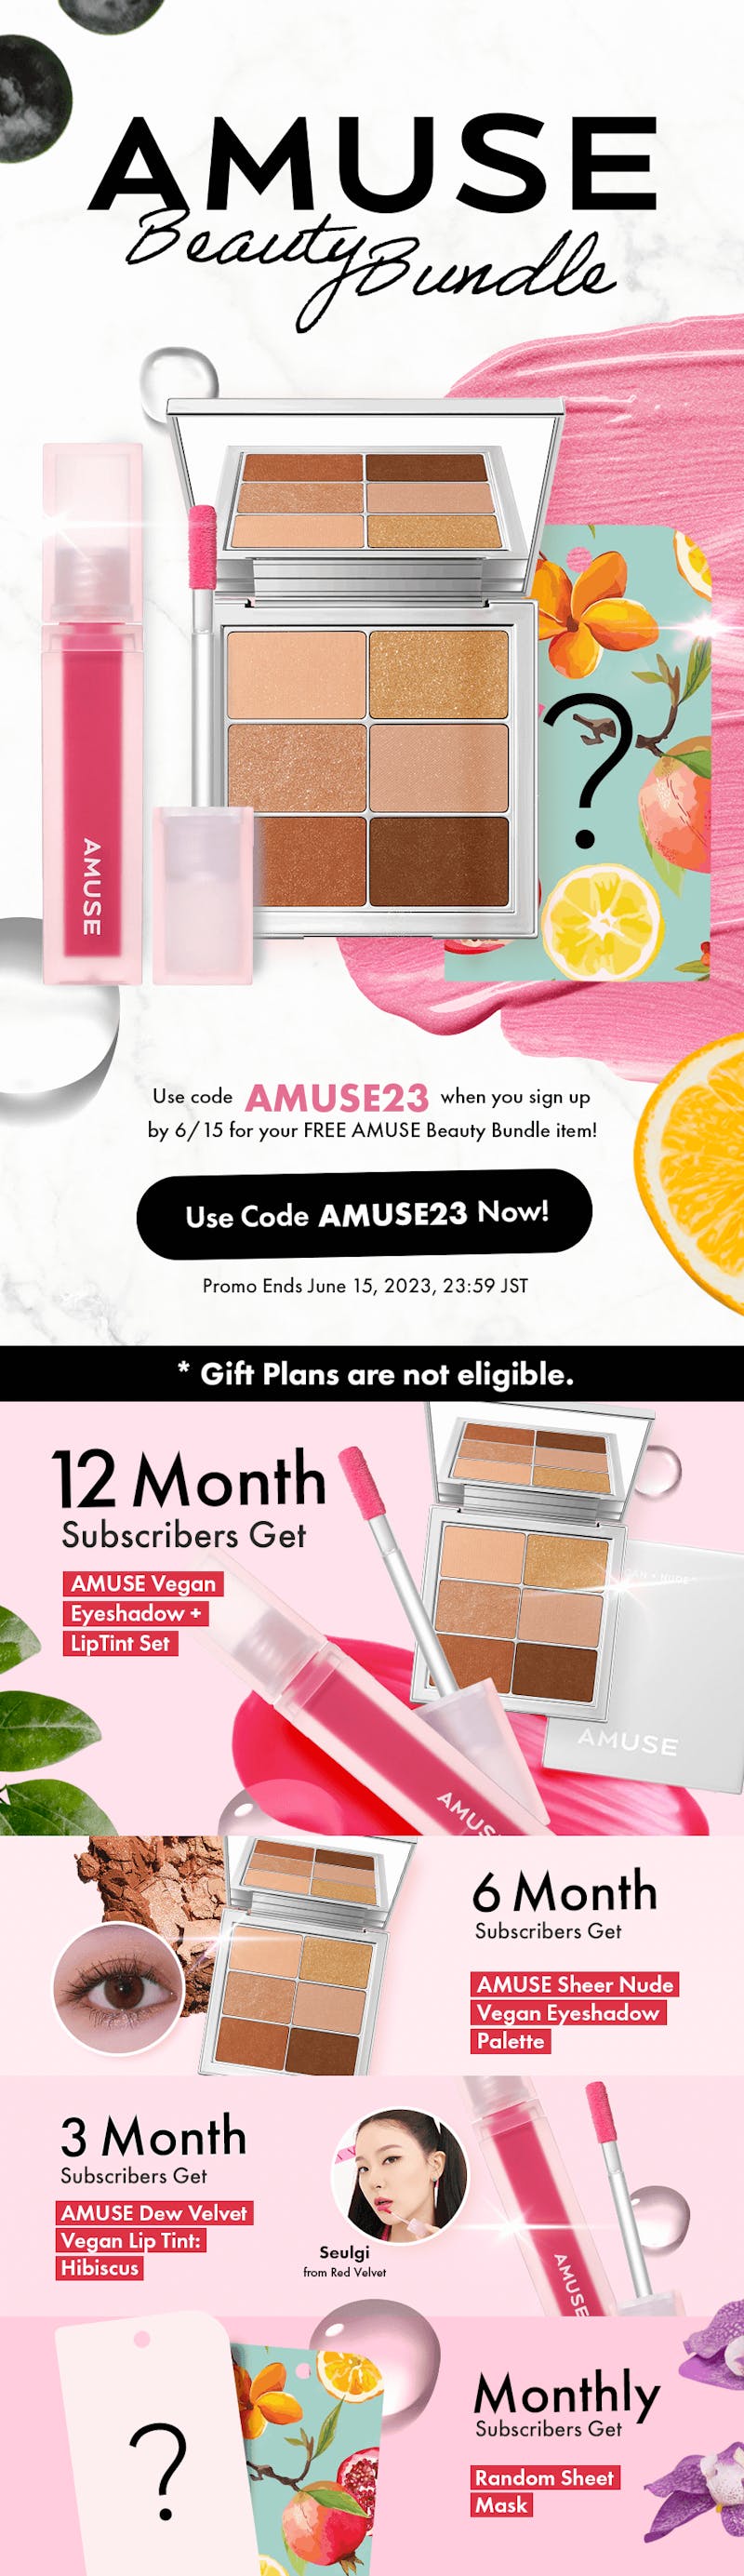 nomakenolife's AMUSE Beauty Bundle promotion that features a vegan eyeshadow palette and lip gloss set